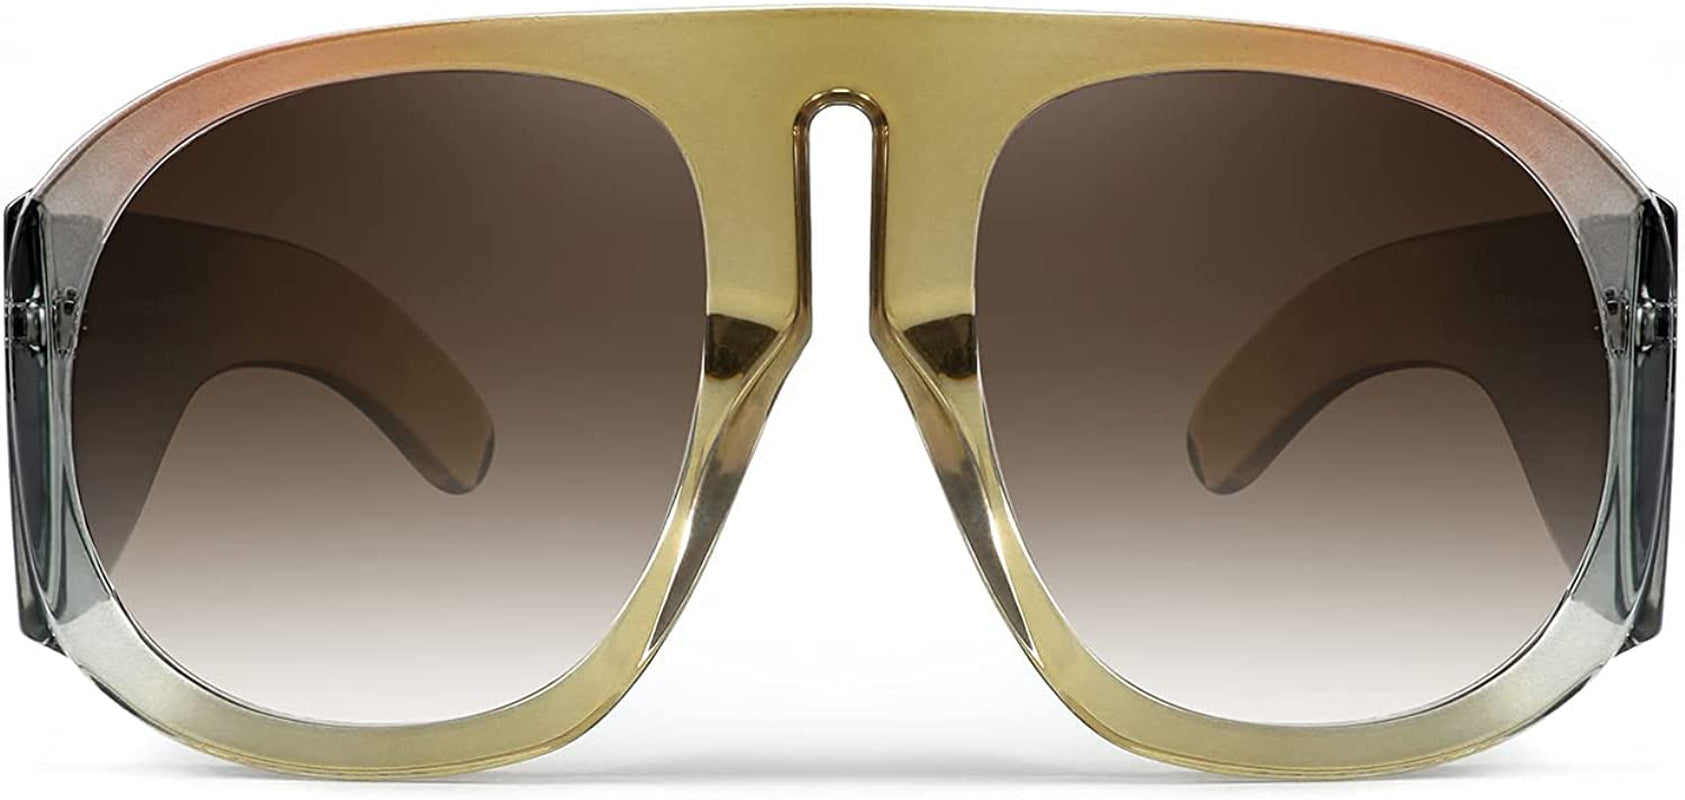 Oversized Square Sunglasses Women Men round Shield Sunglasses Vintage Plastic Thick Frame Shades B2745